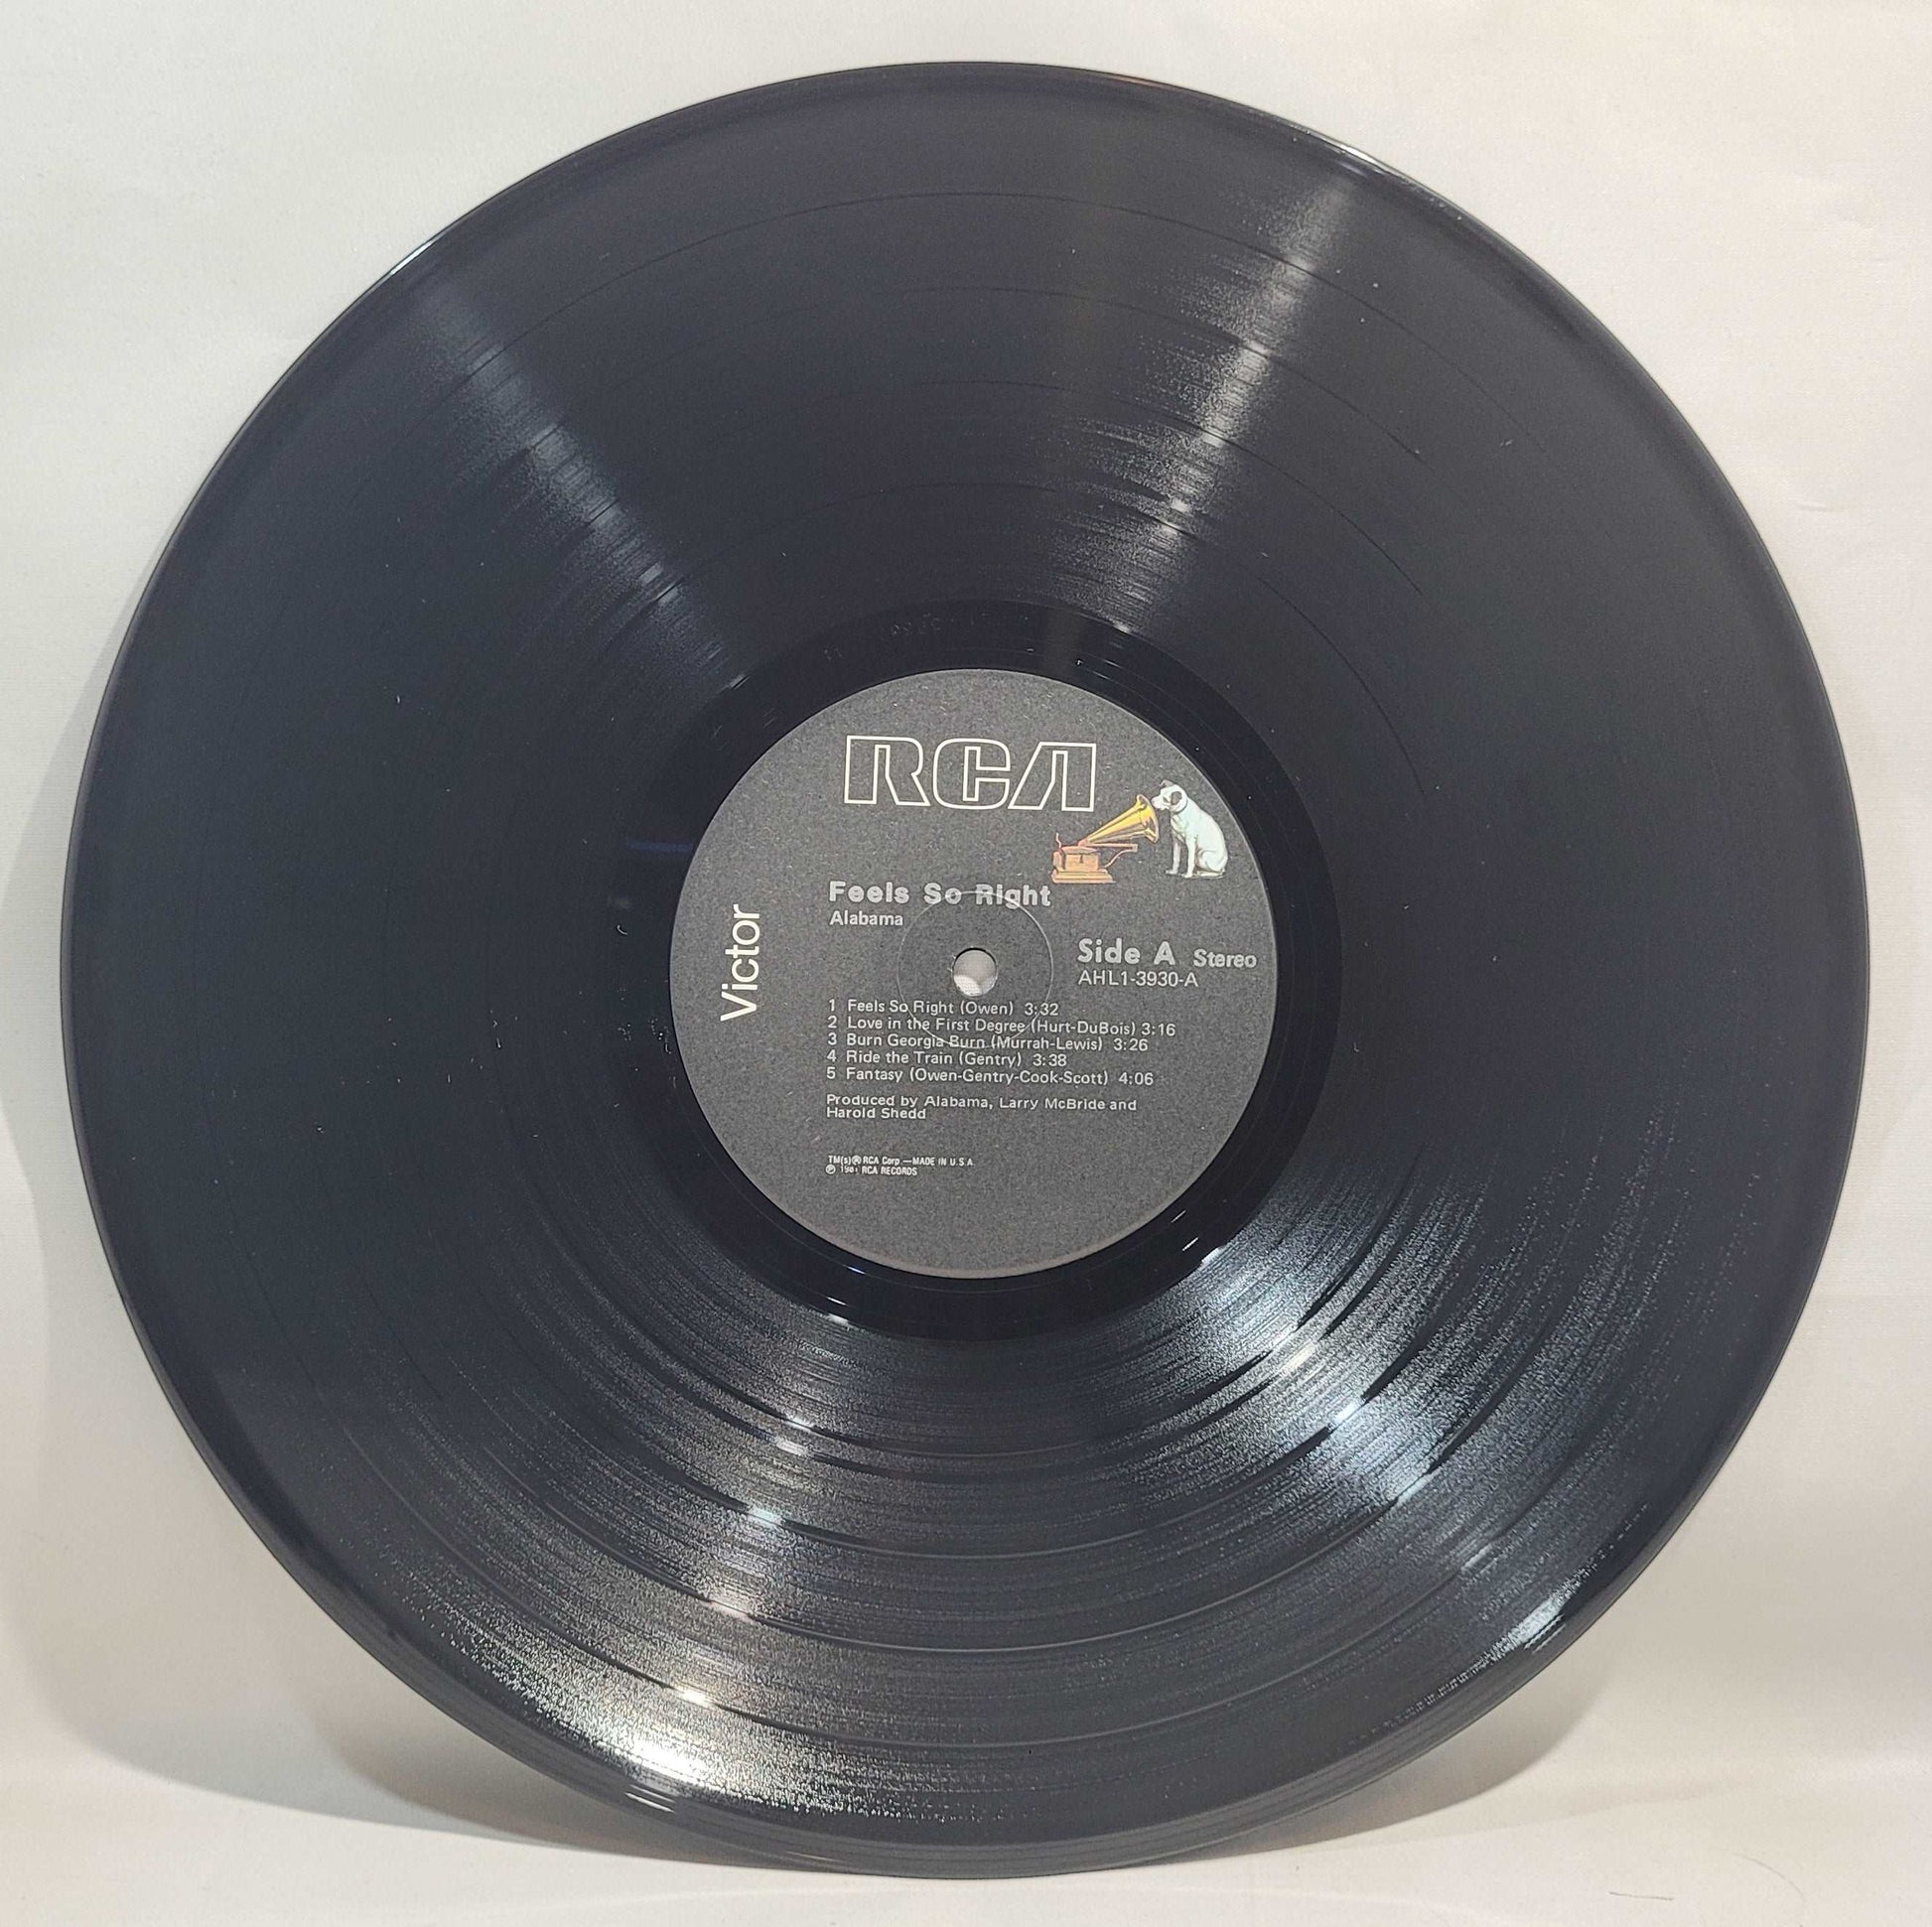 Alabama - Feels so Right [Vinyl Record LP]